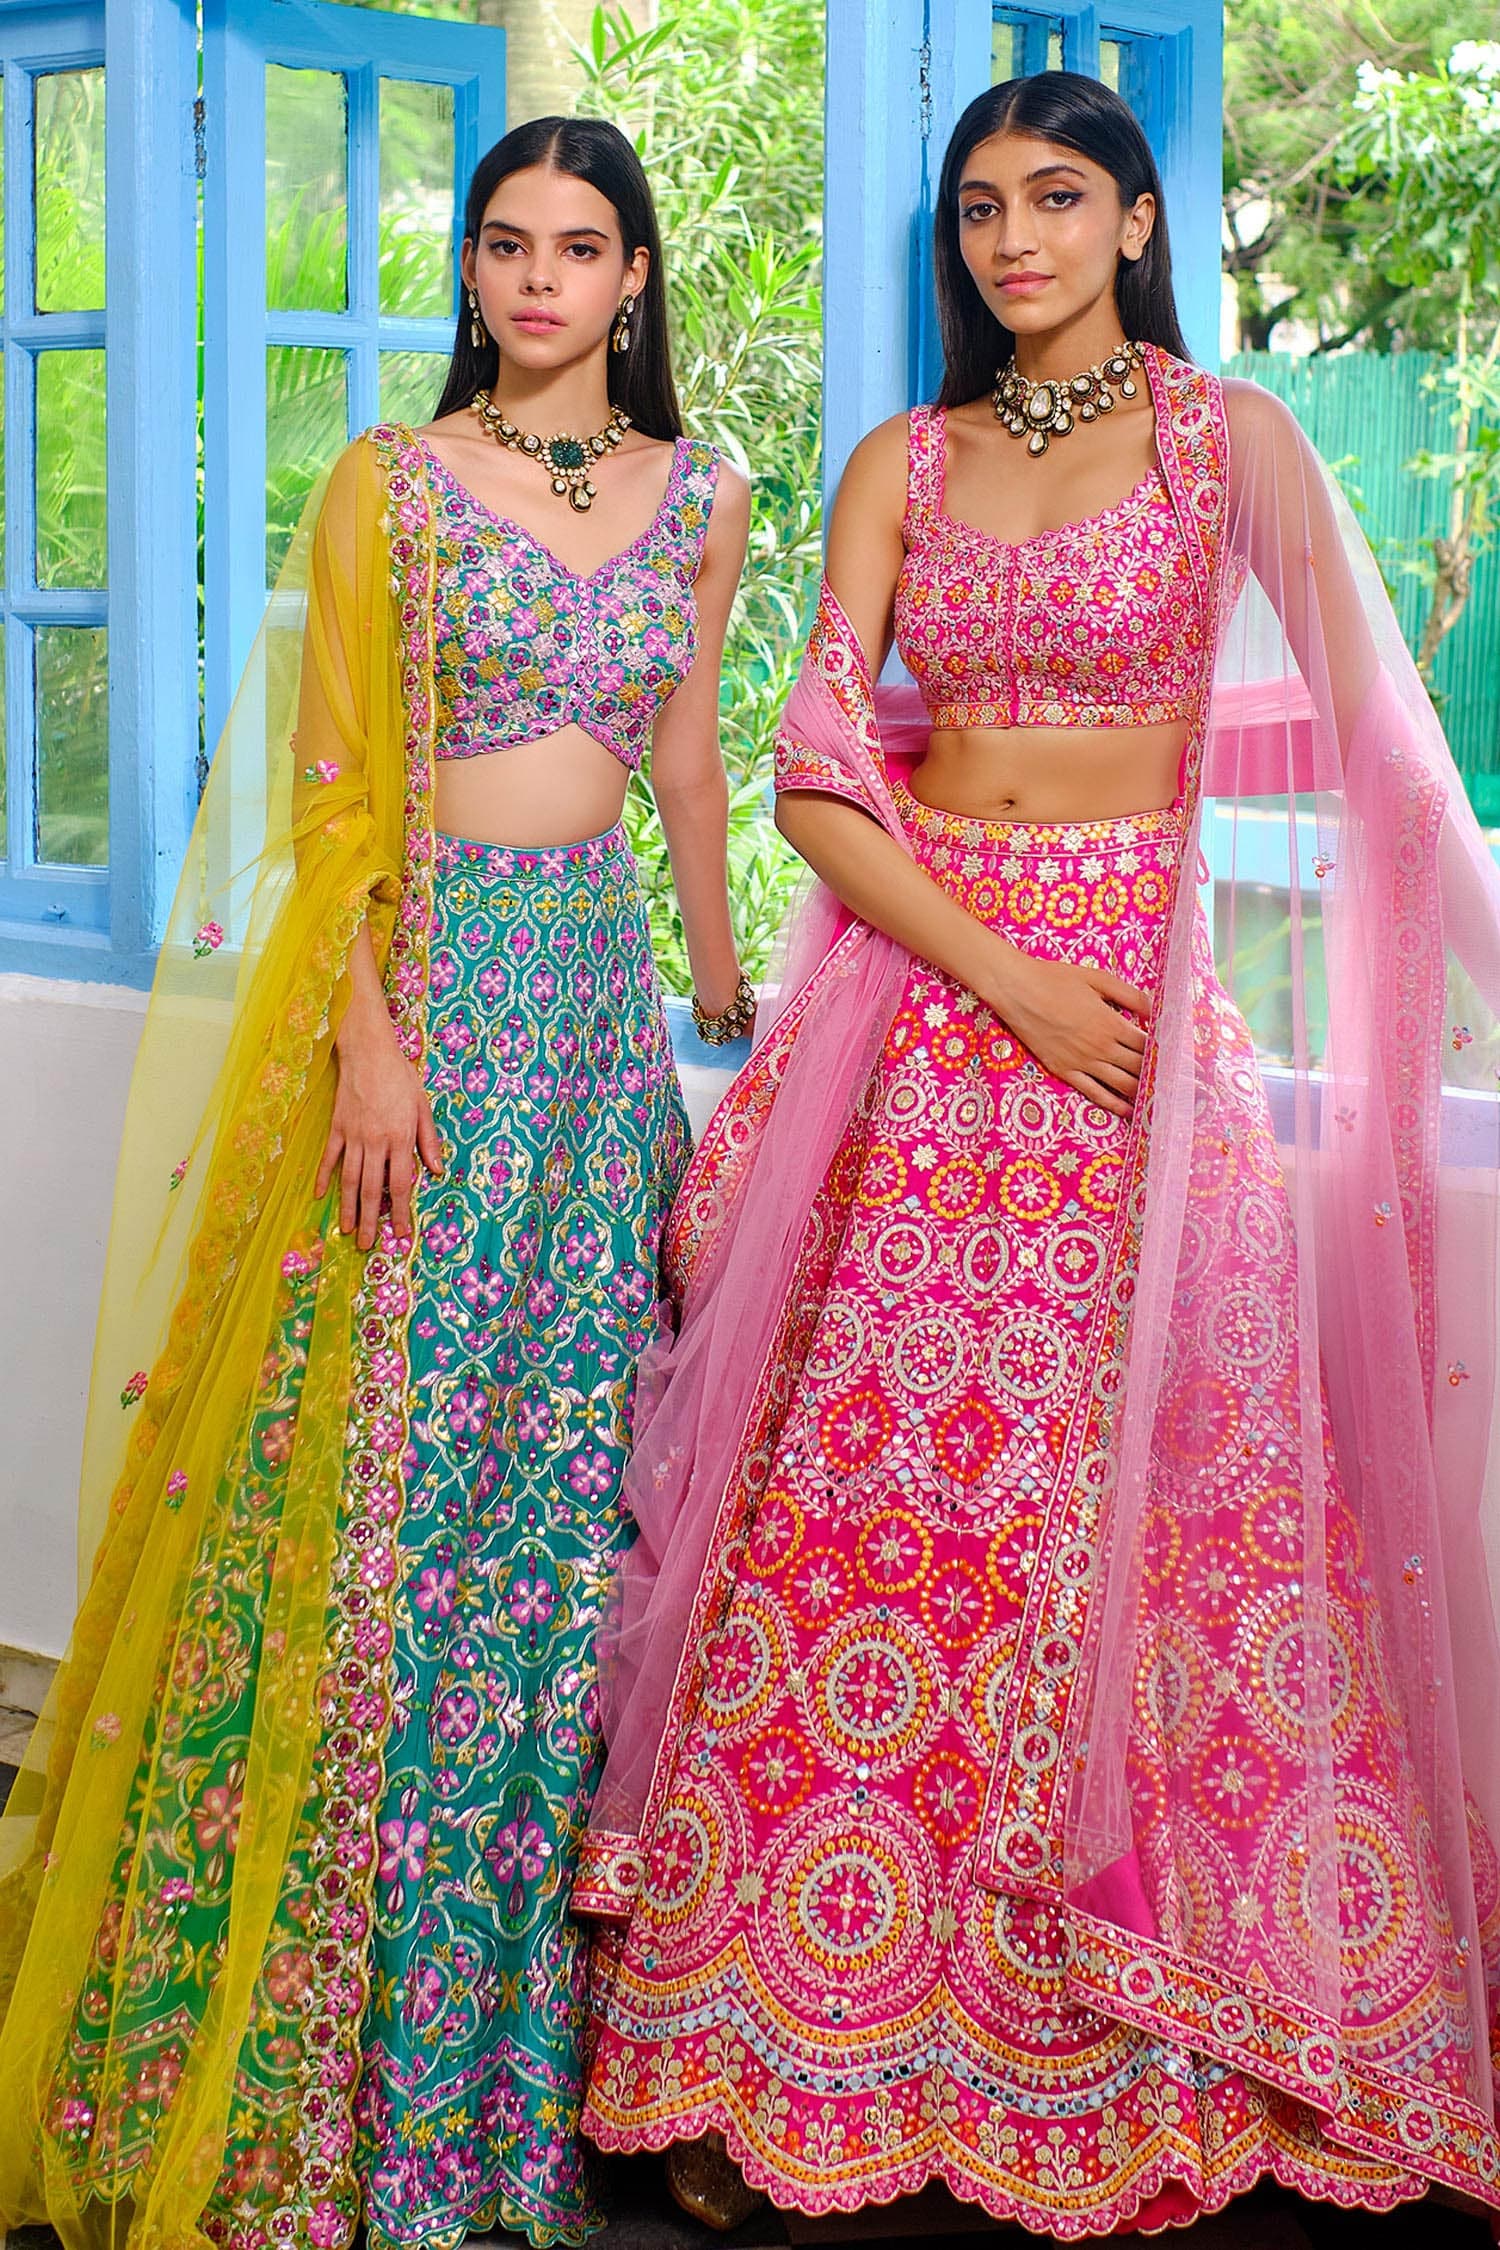 Pink Lehenga Choli Designs - 15 Stunning and Beautiful Models